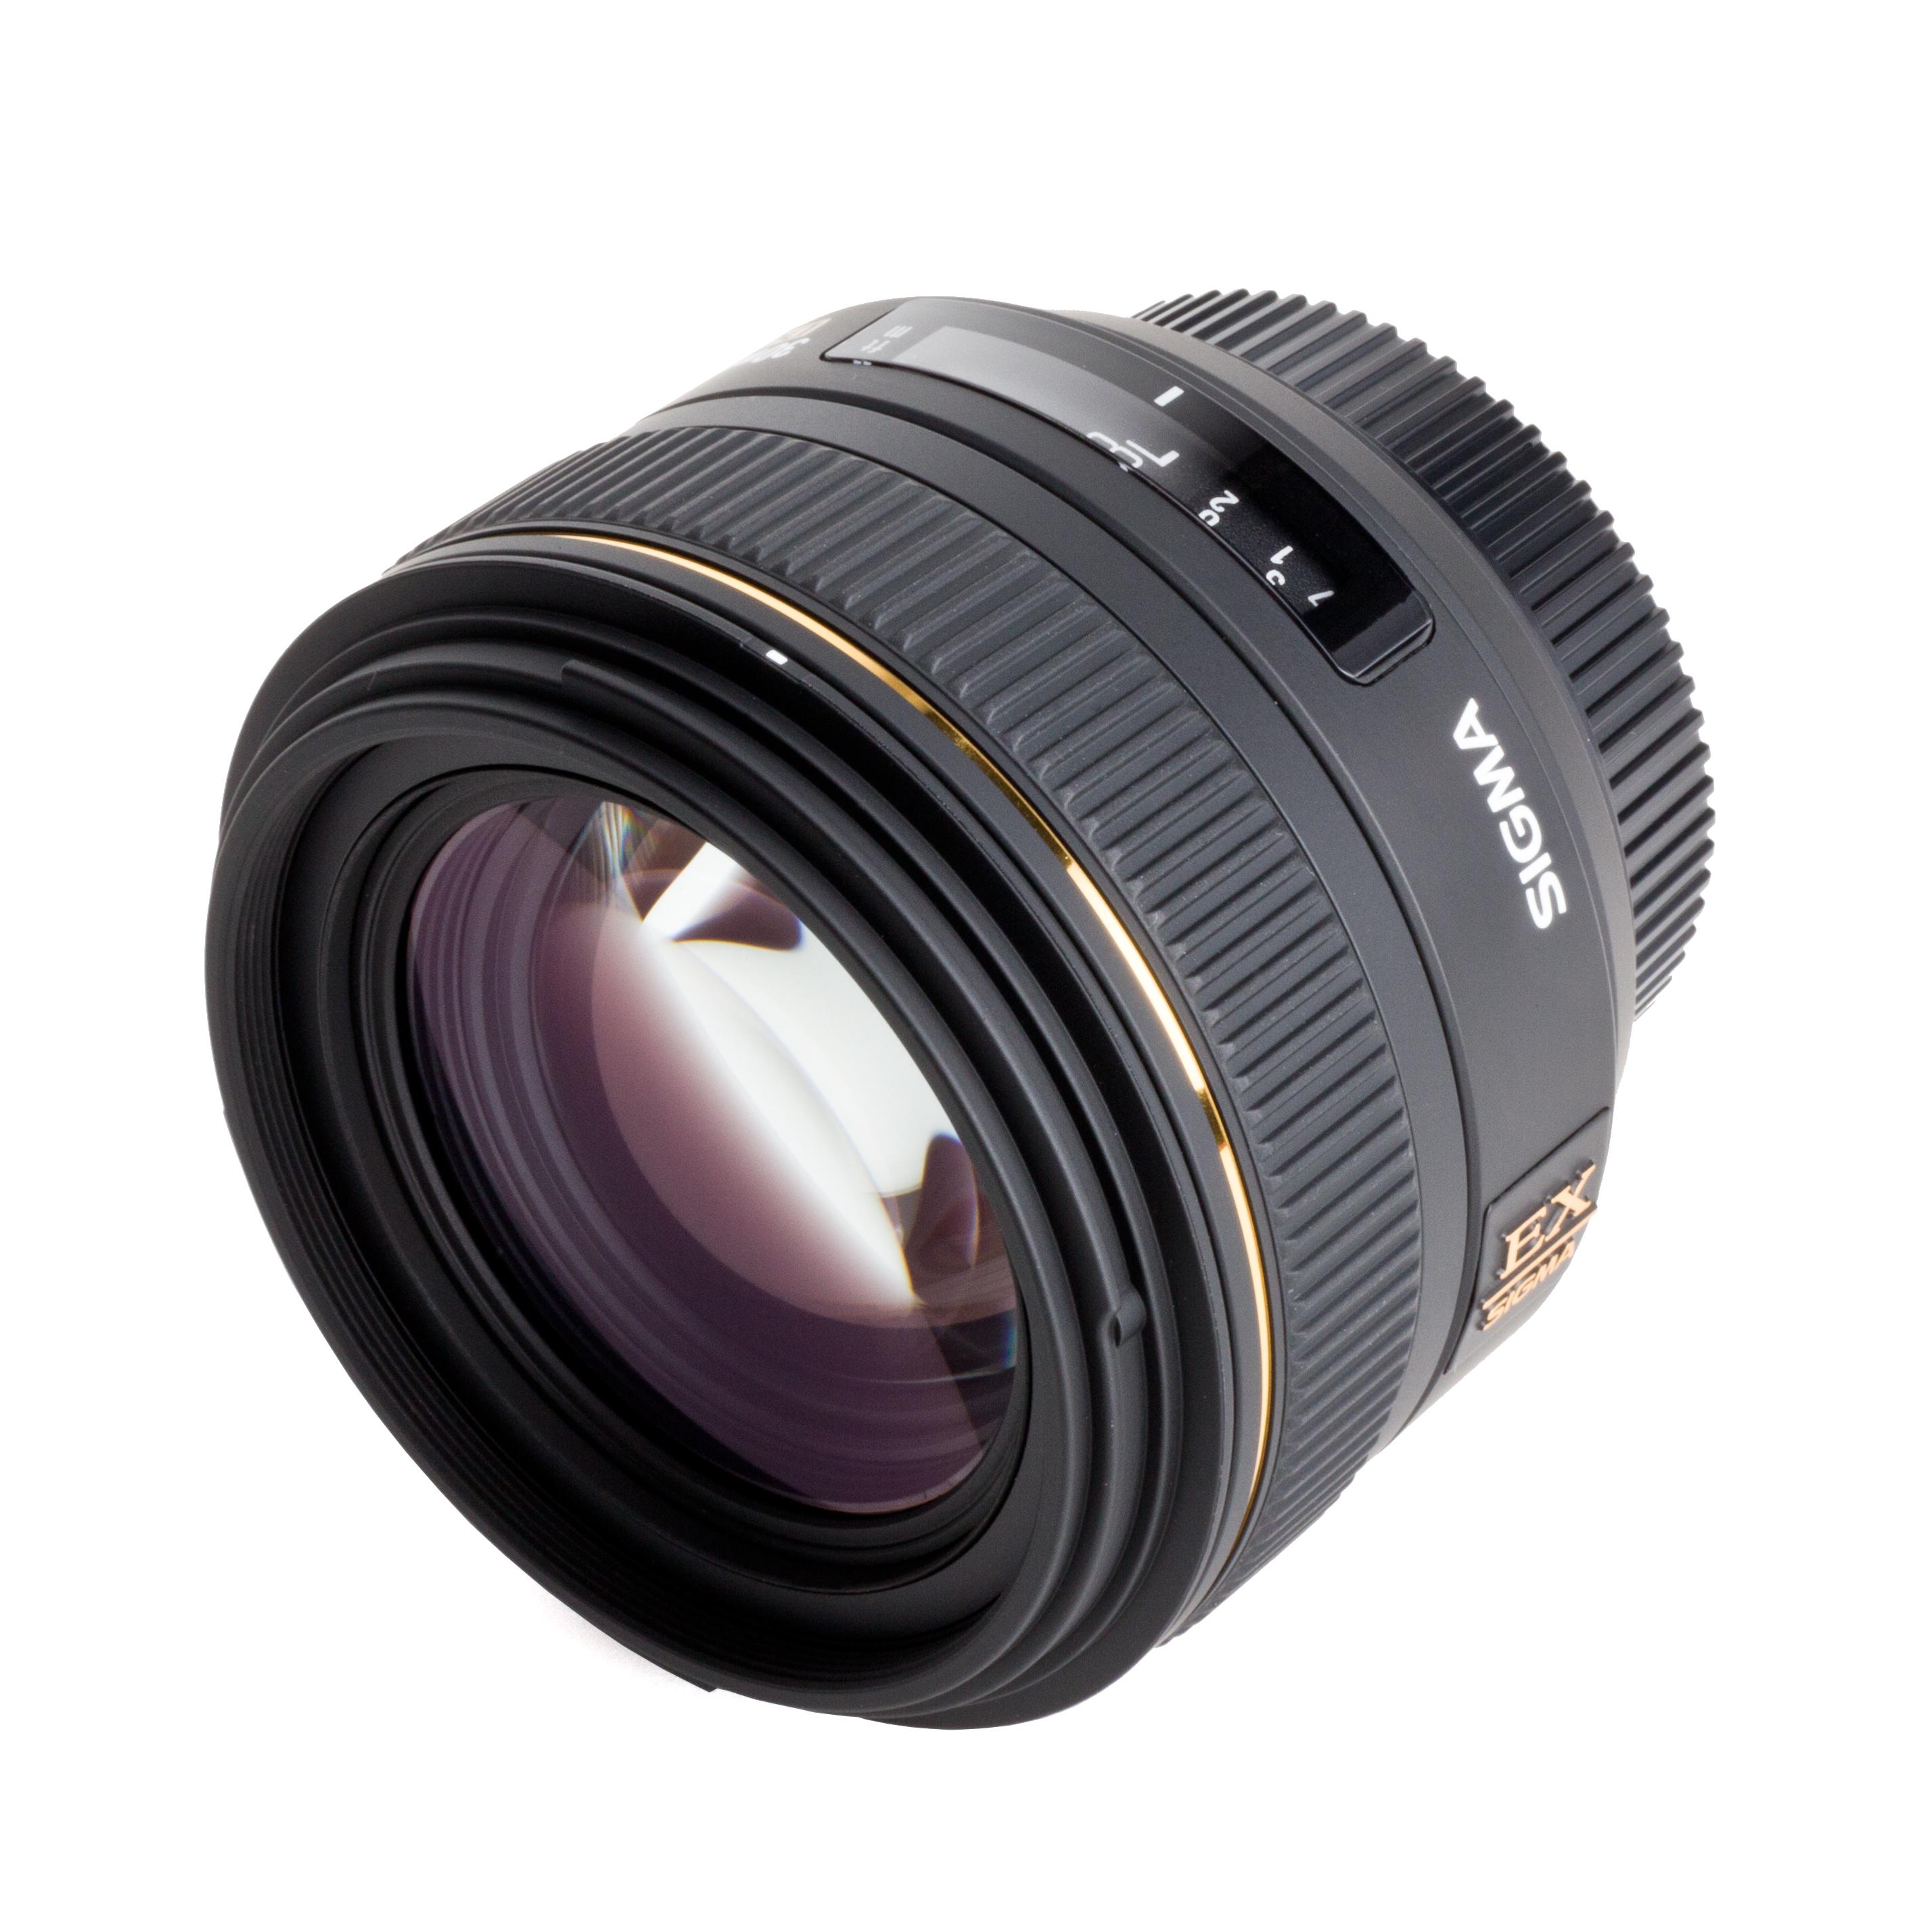 Sigma 30mm f1.4 EX DC HSM für Nikon Festbrennweite 30 mm